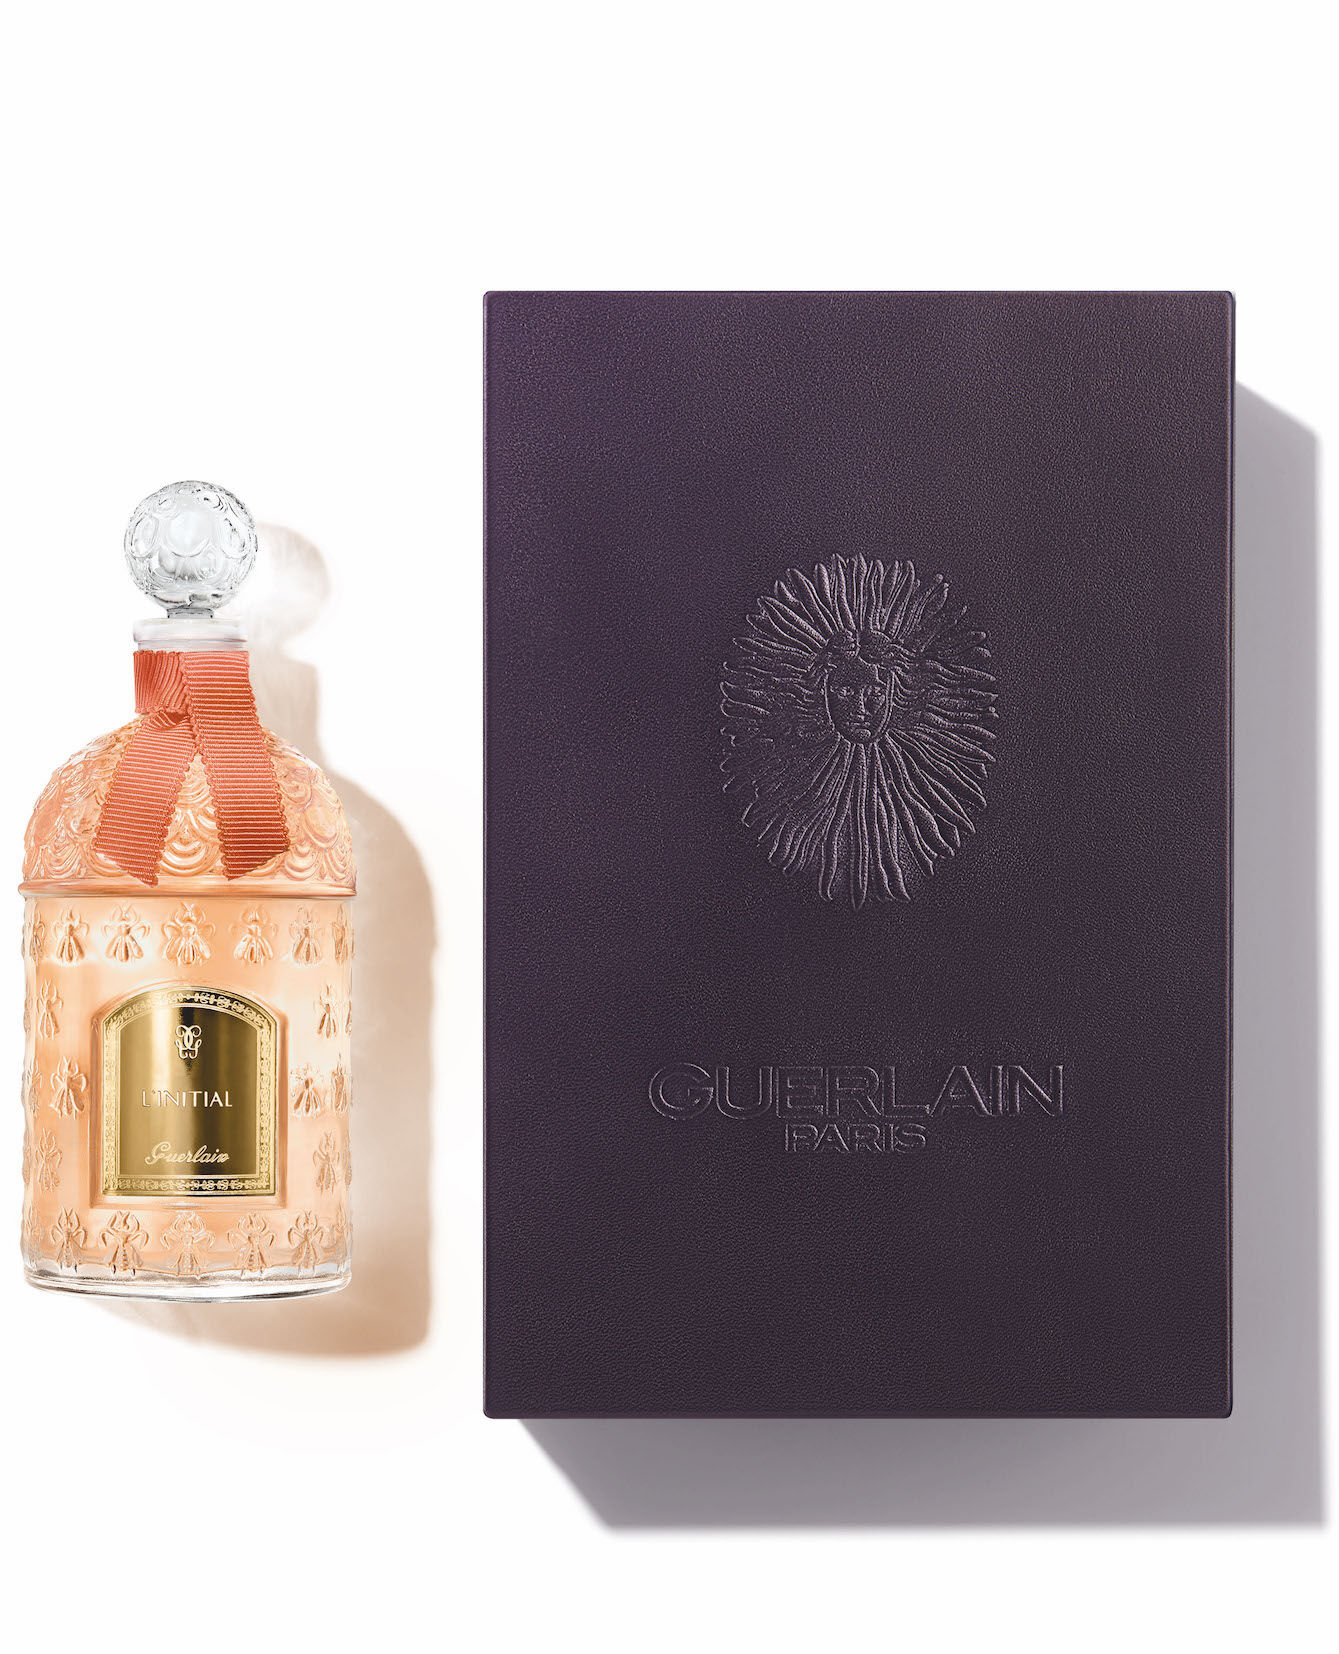 Guerlain Is Bringing Back These Signature Fragrances